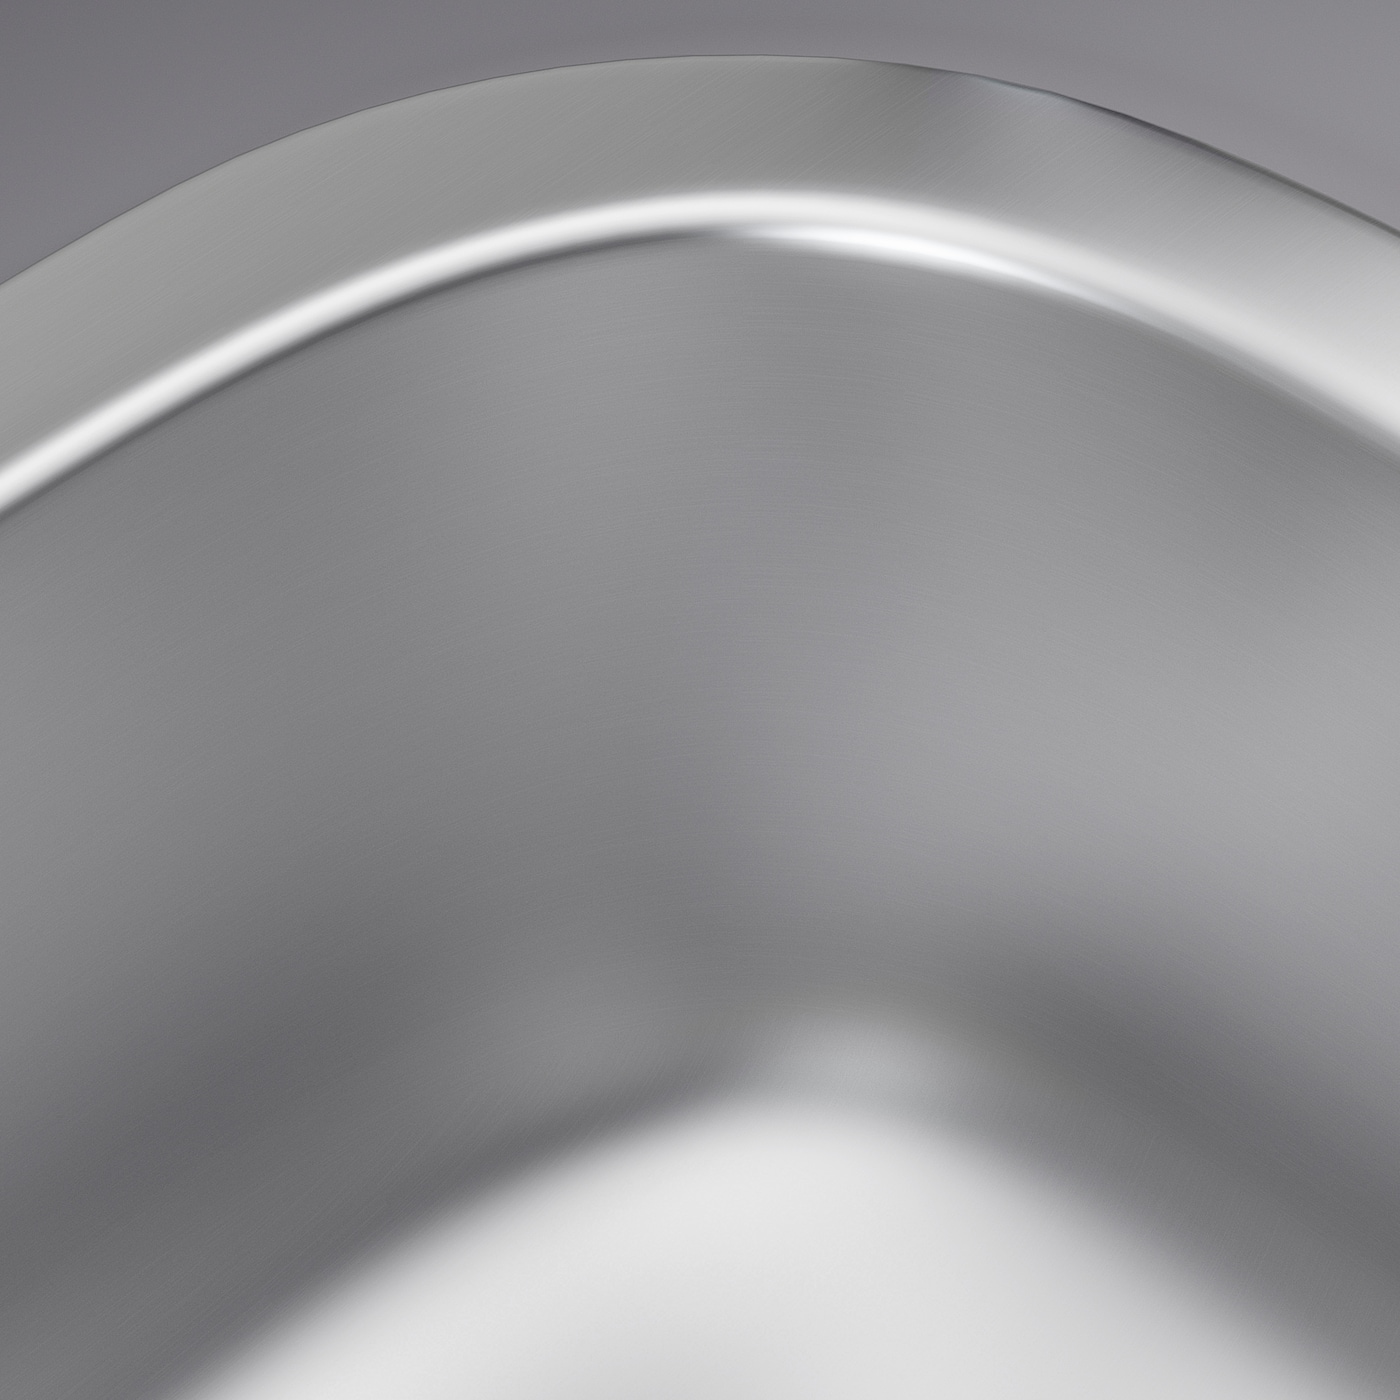 FYNDIG inset sink, 1 bowl stainless steel - IKEA